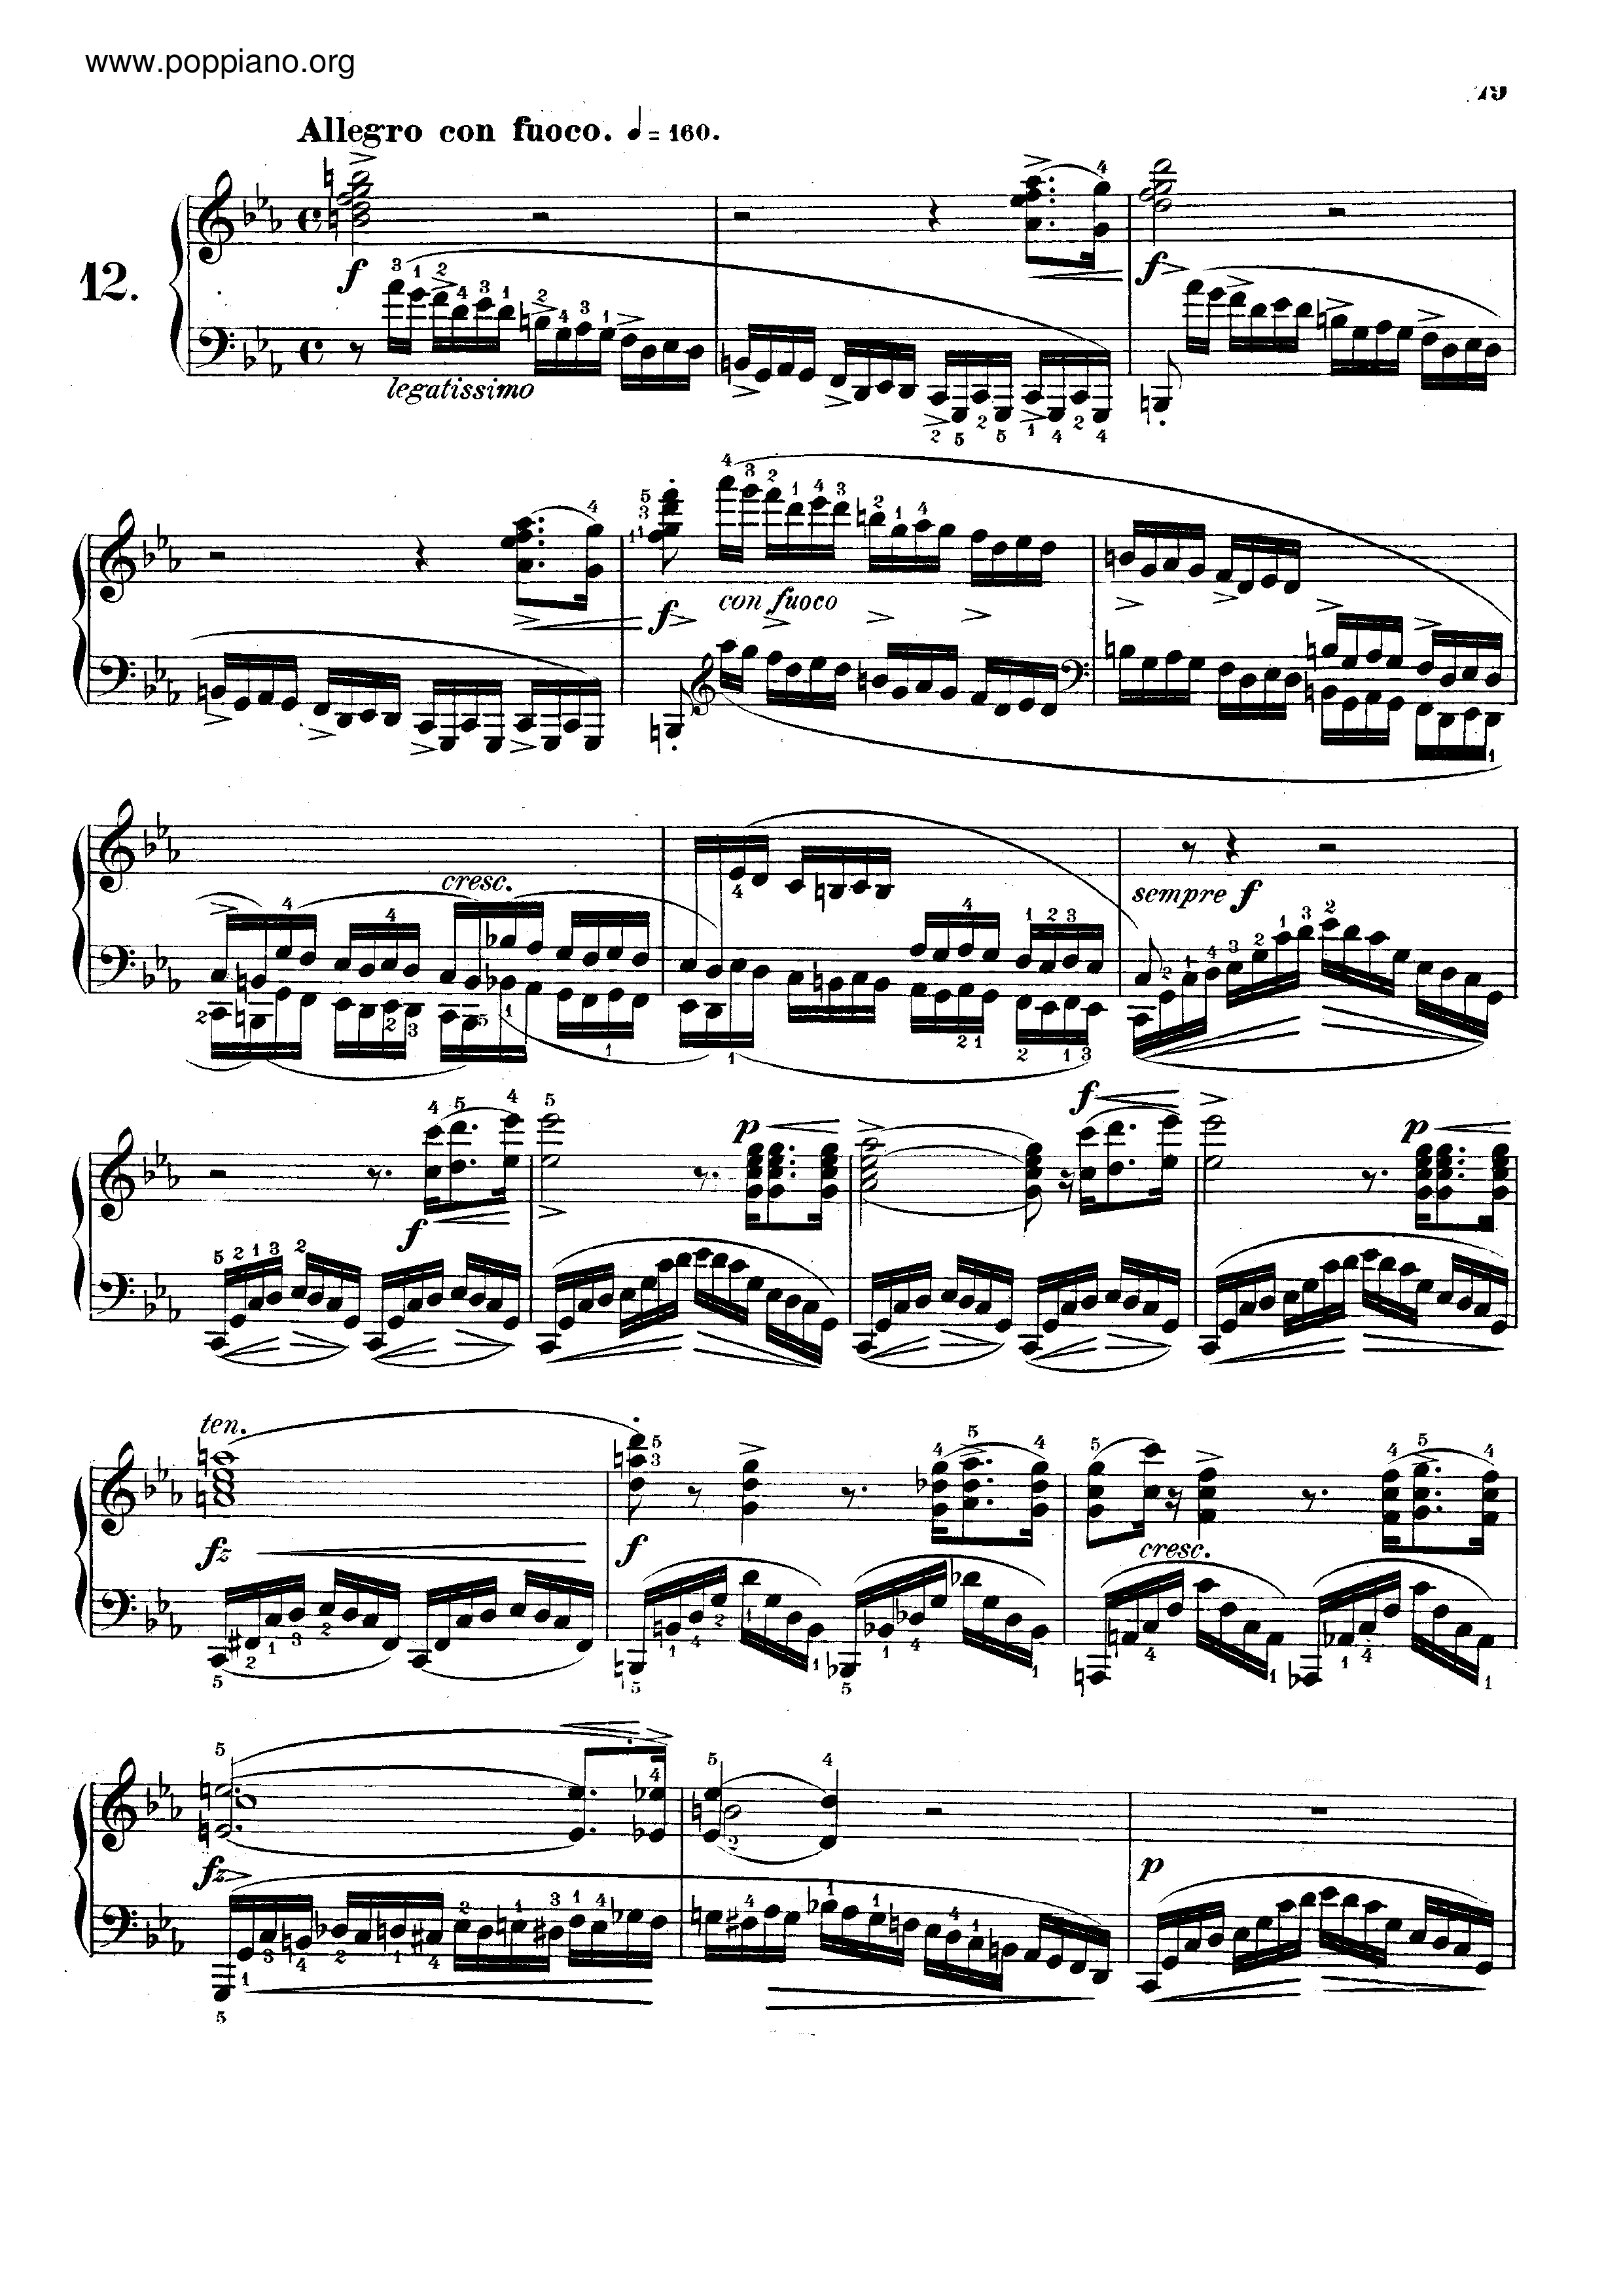 Op. 10, Etude No. 12 革命練習曲ピアノ譜